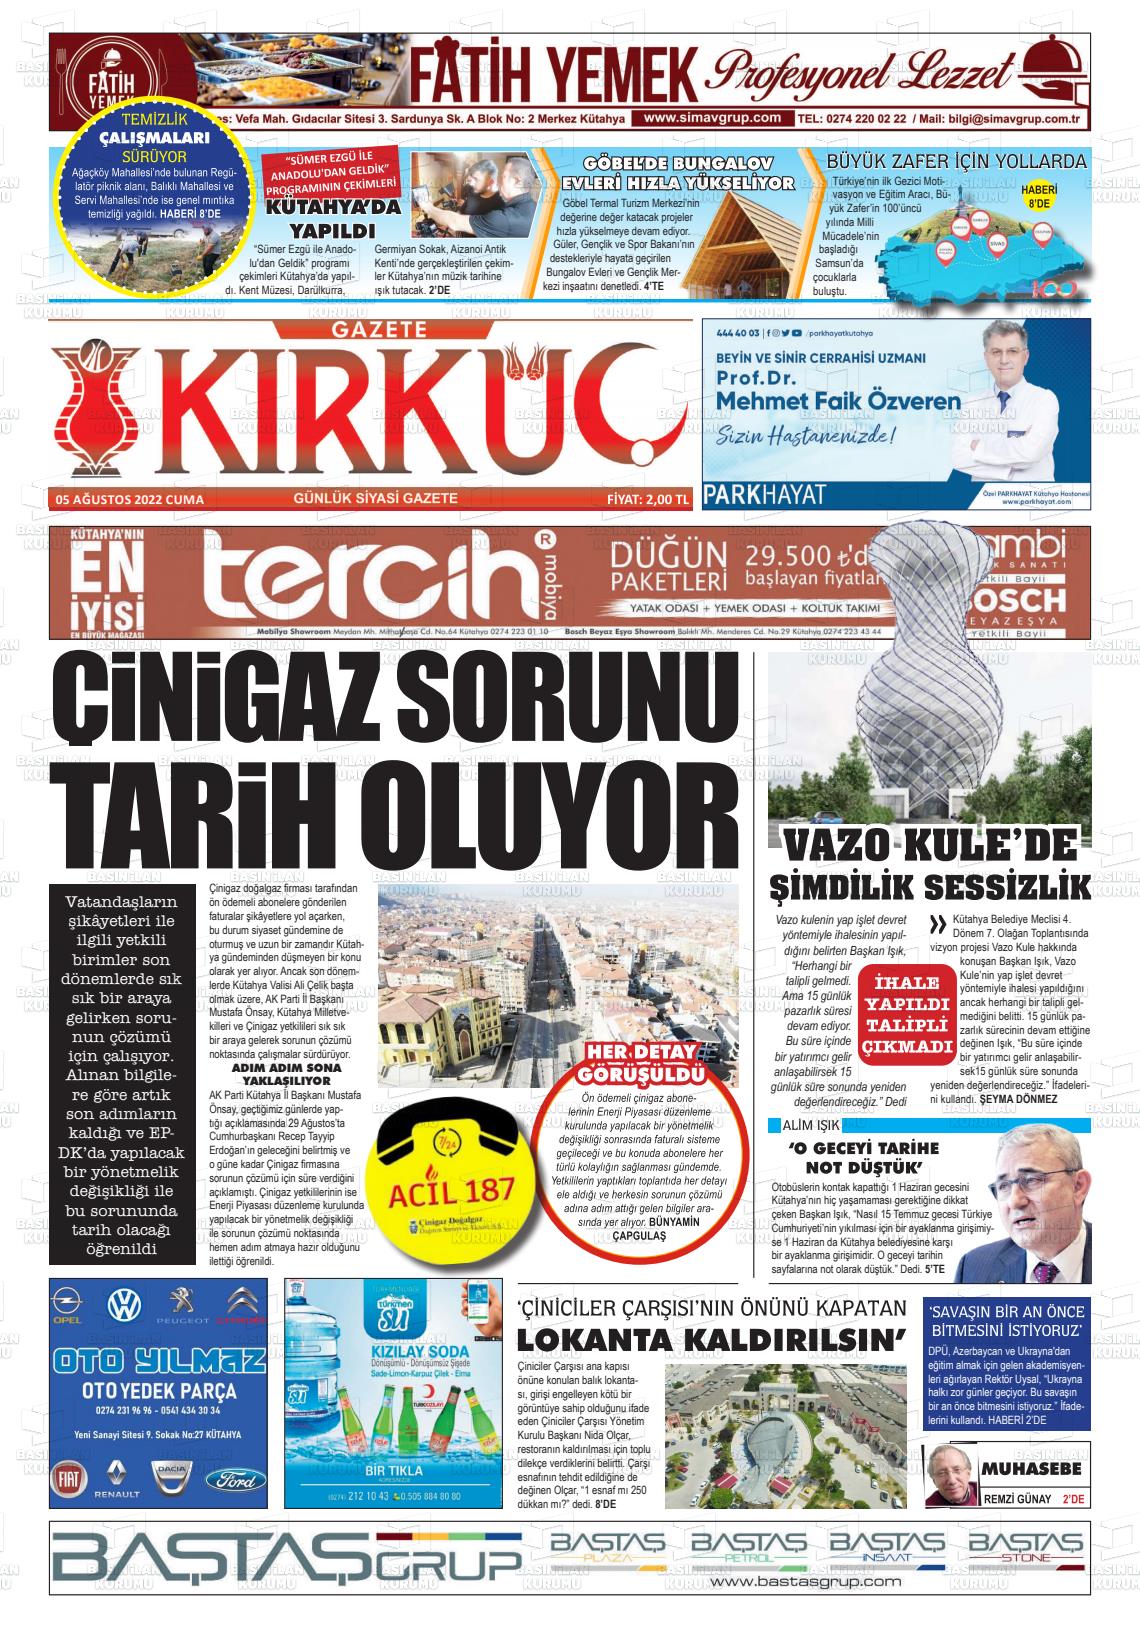 05 Ağustos 2022 Gazete Kırküç Gazete Manşeti